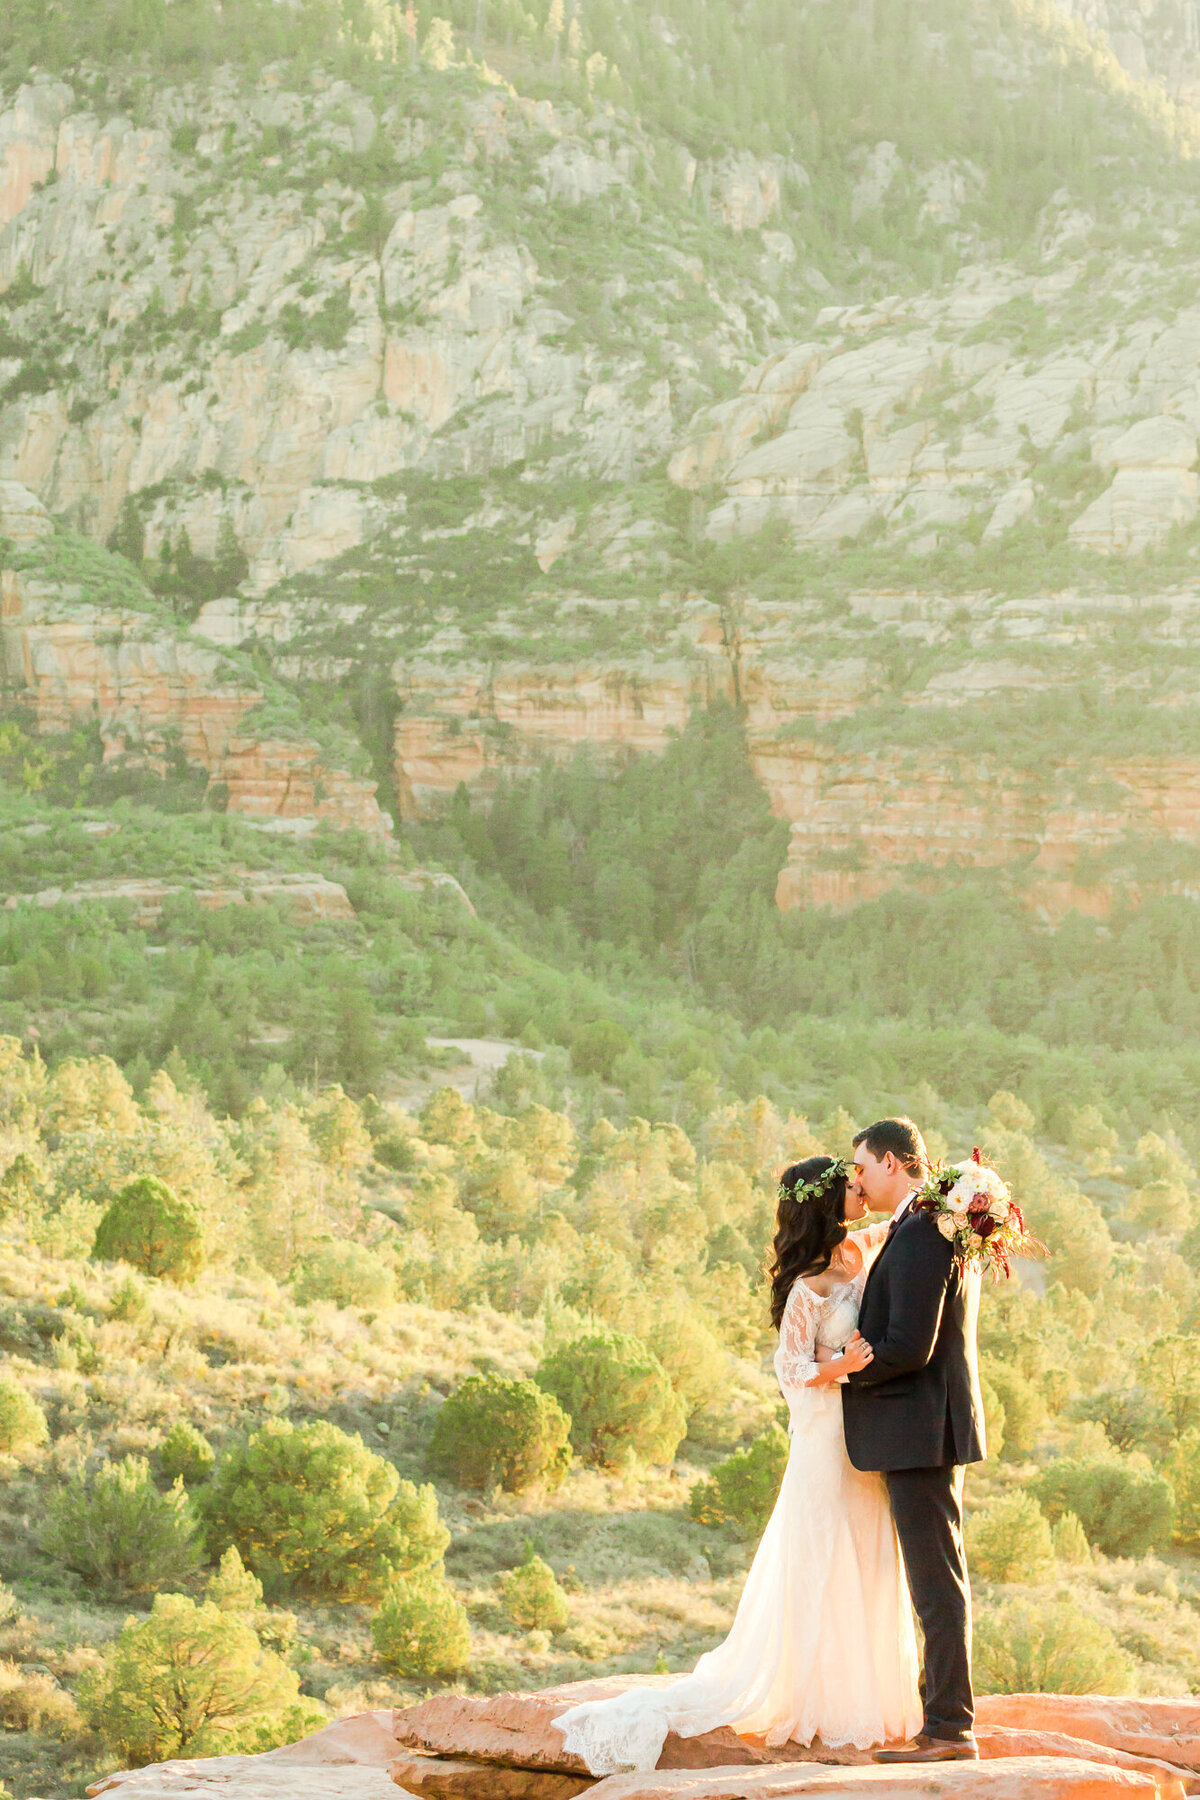 Wedding Portrait Photography - Sedona, Arizona - Merry Go Round Rock - Bayley Jordan Photography